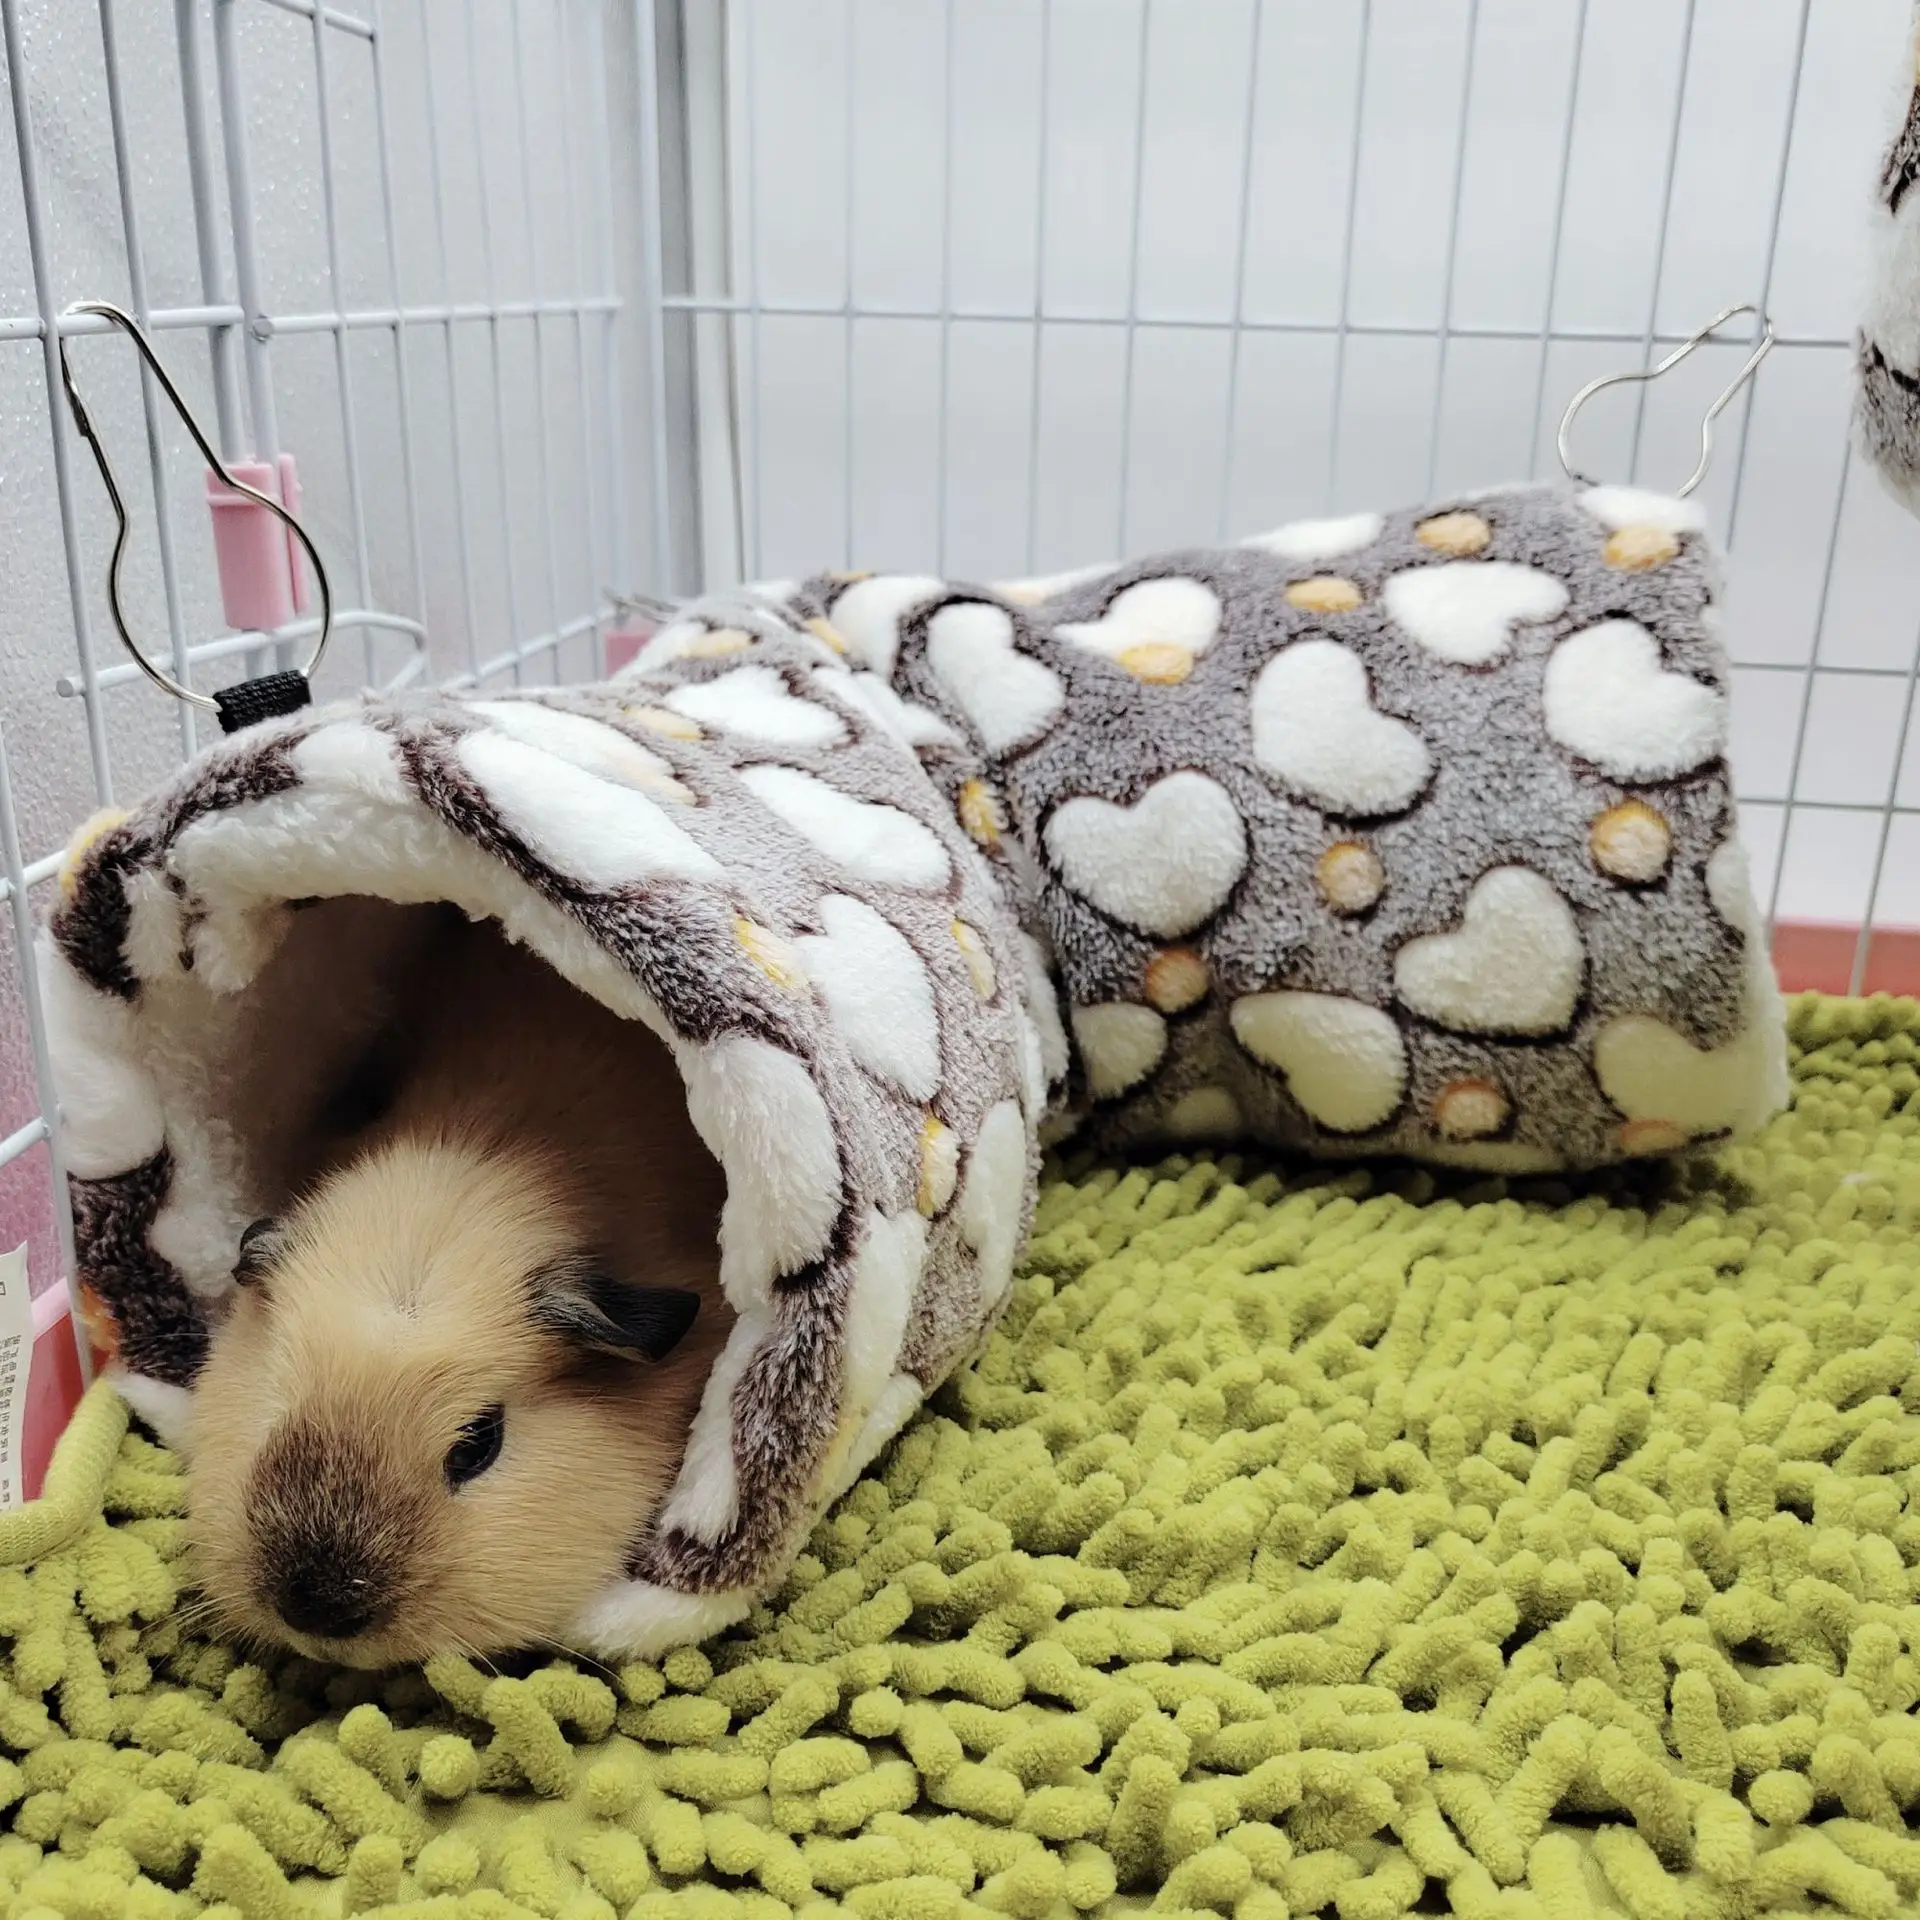 Hamster Warm Channel Hammock Bed Pet Channel Sugar Glider Pig Guinea Pig Super Soft Tunnel Nest